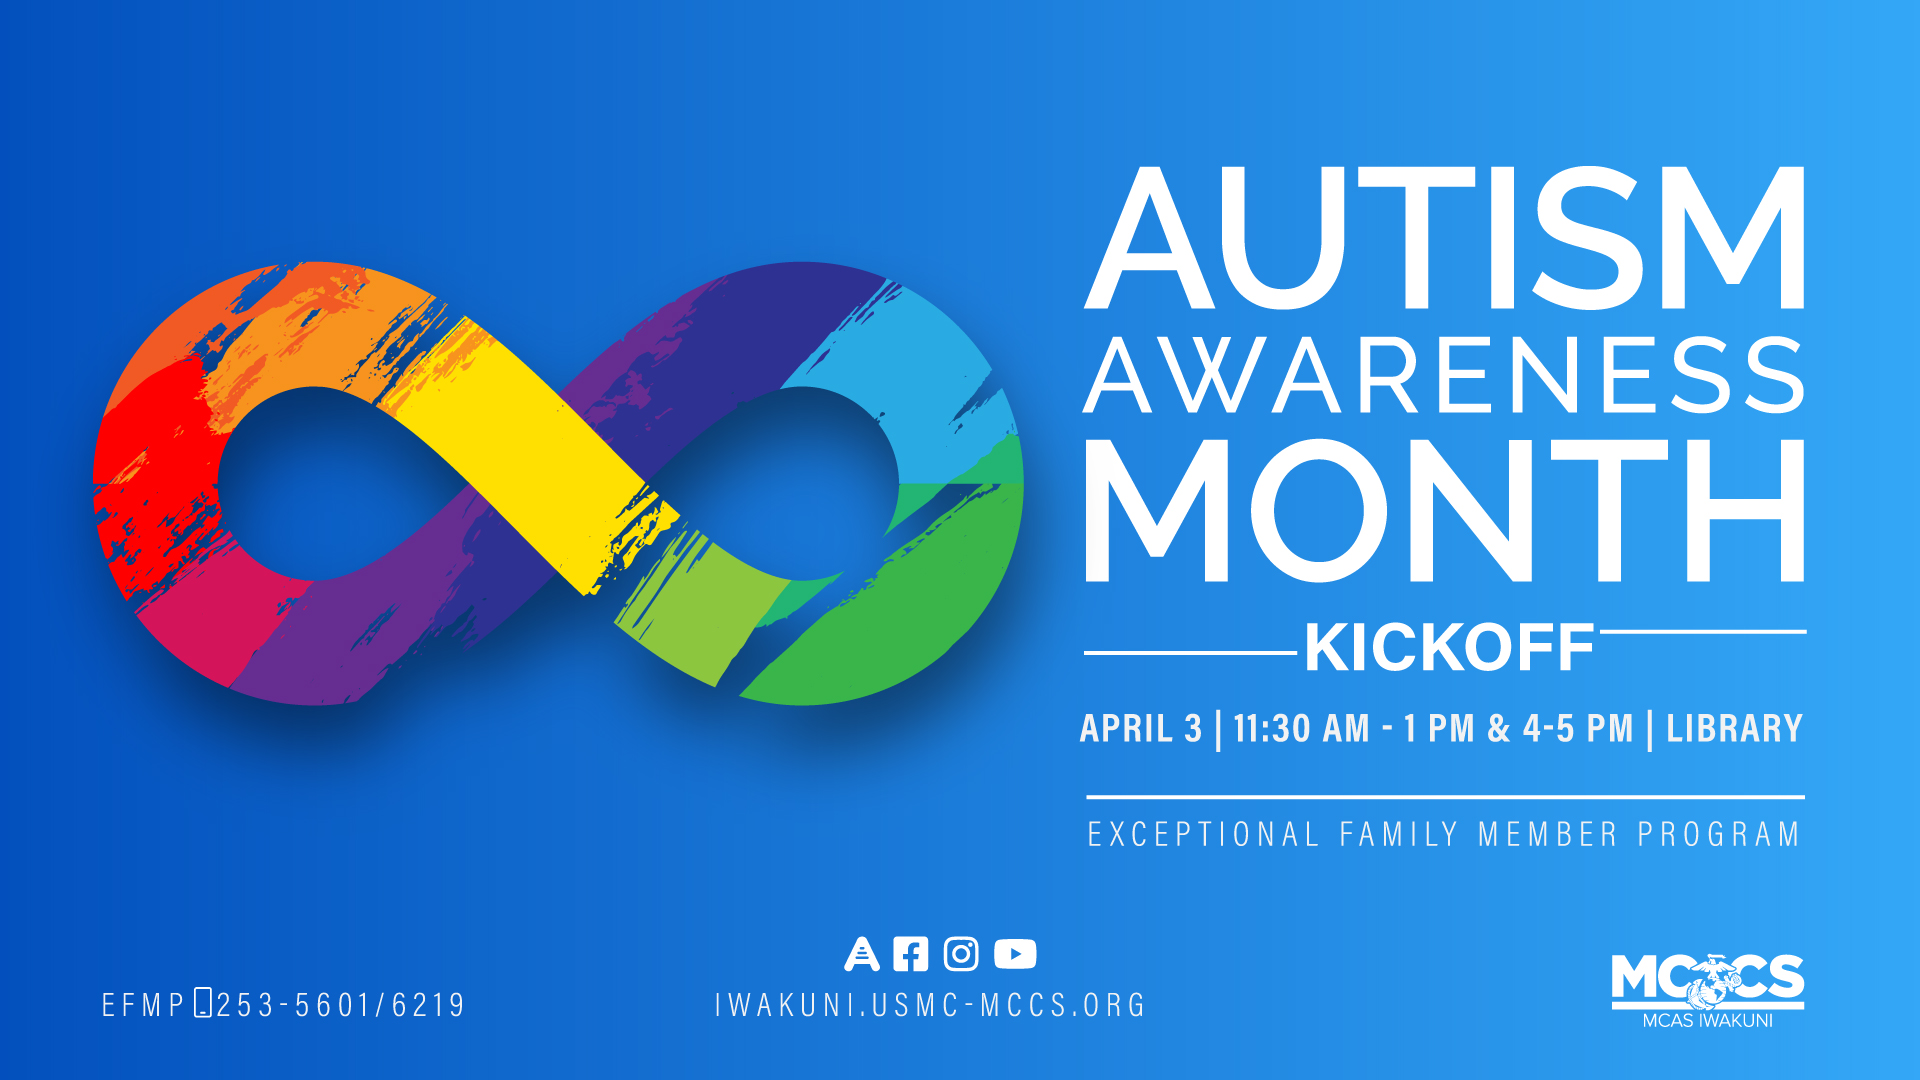 Autism Awareness Month Kickoff